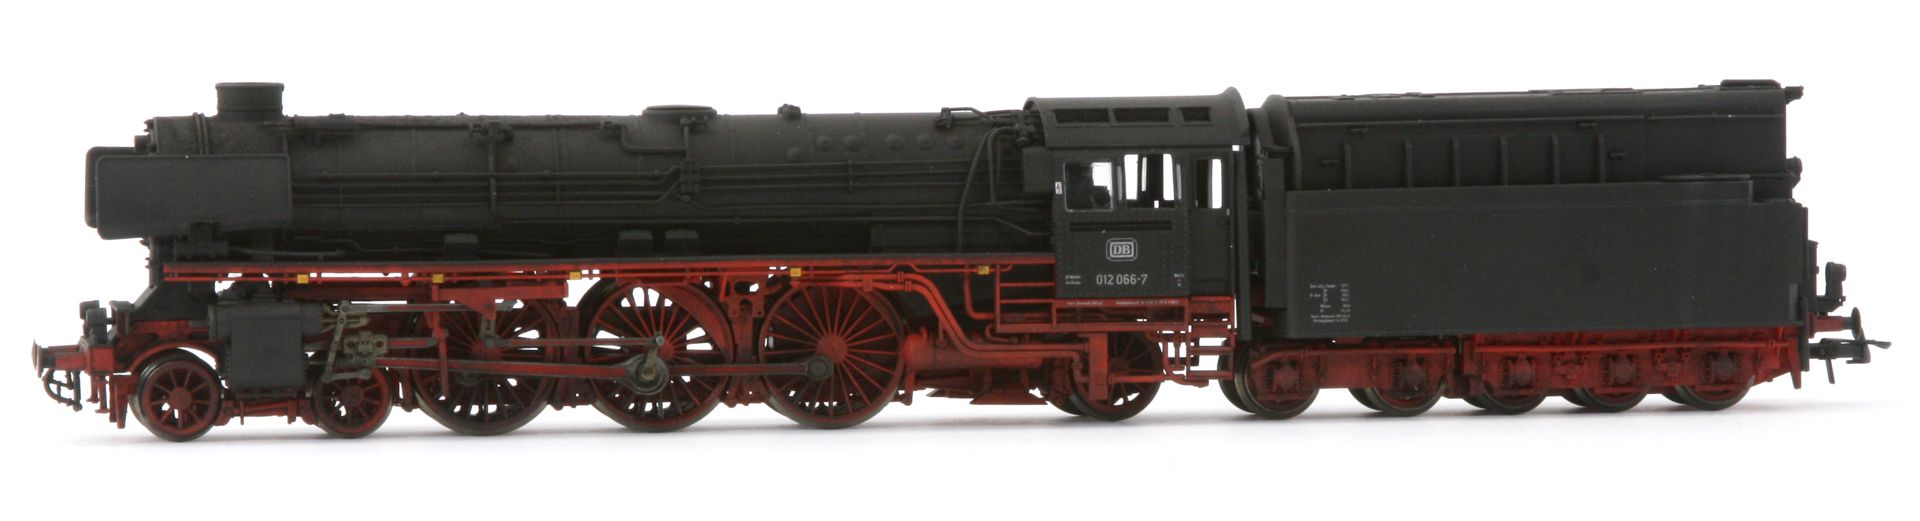 Saxonia 87043 - Dampflok 012 066-7, DB, Ep.IV, gealtert